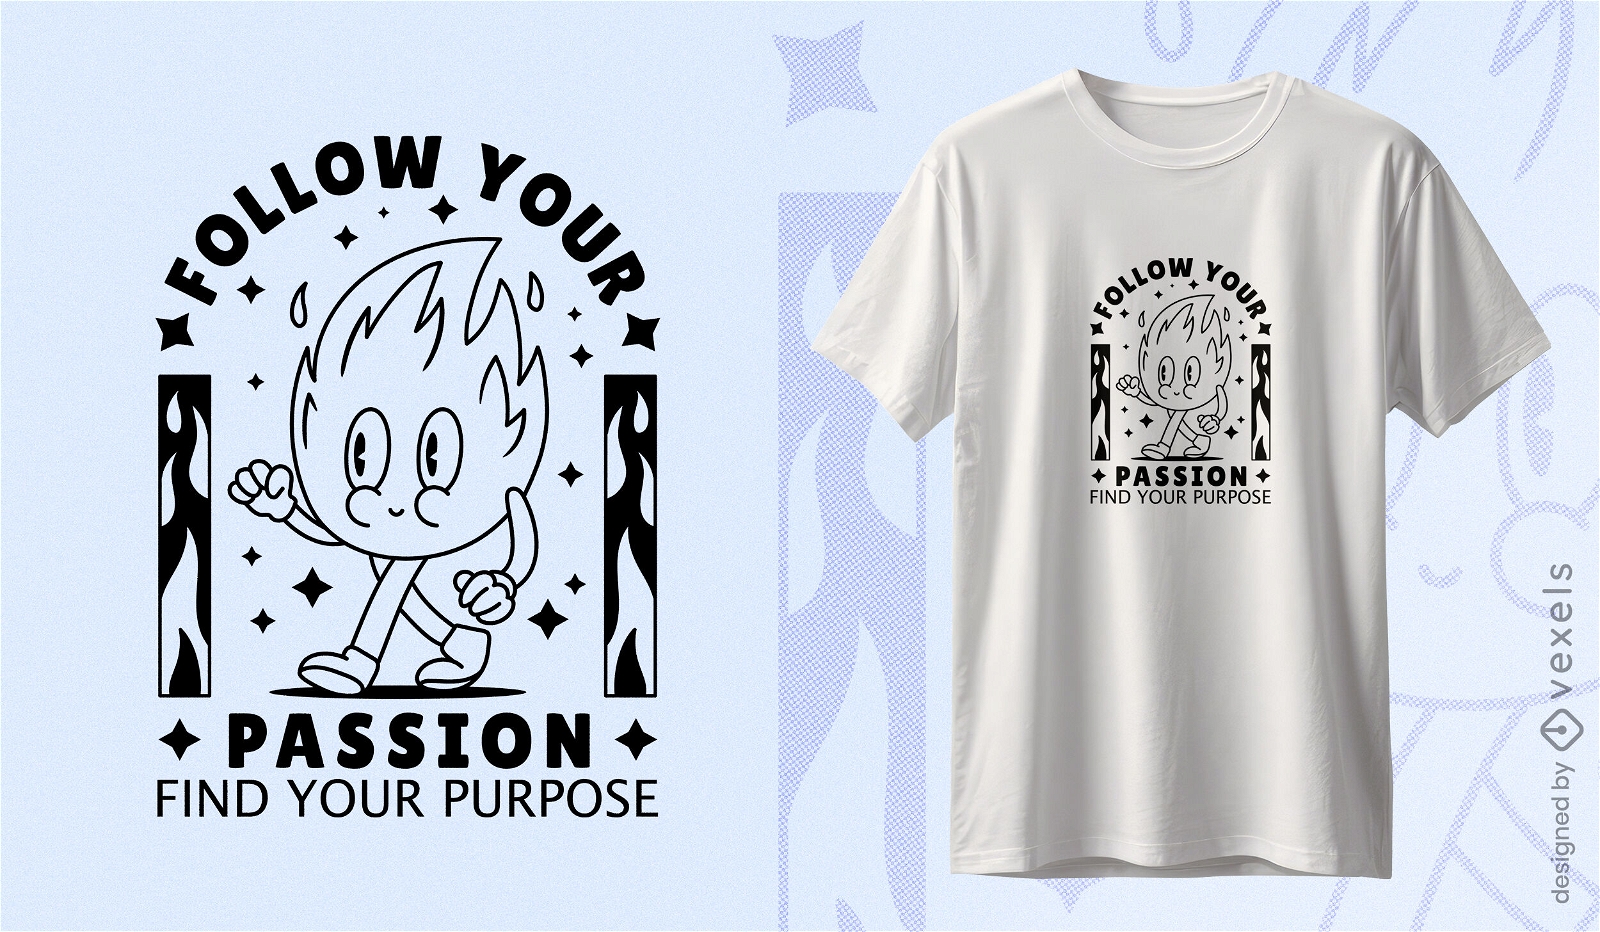 Follow your passion t-shirt design